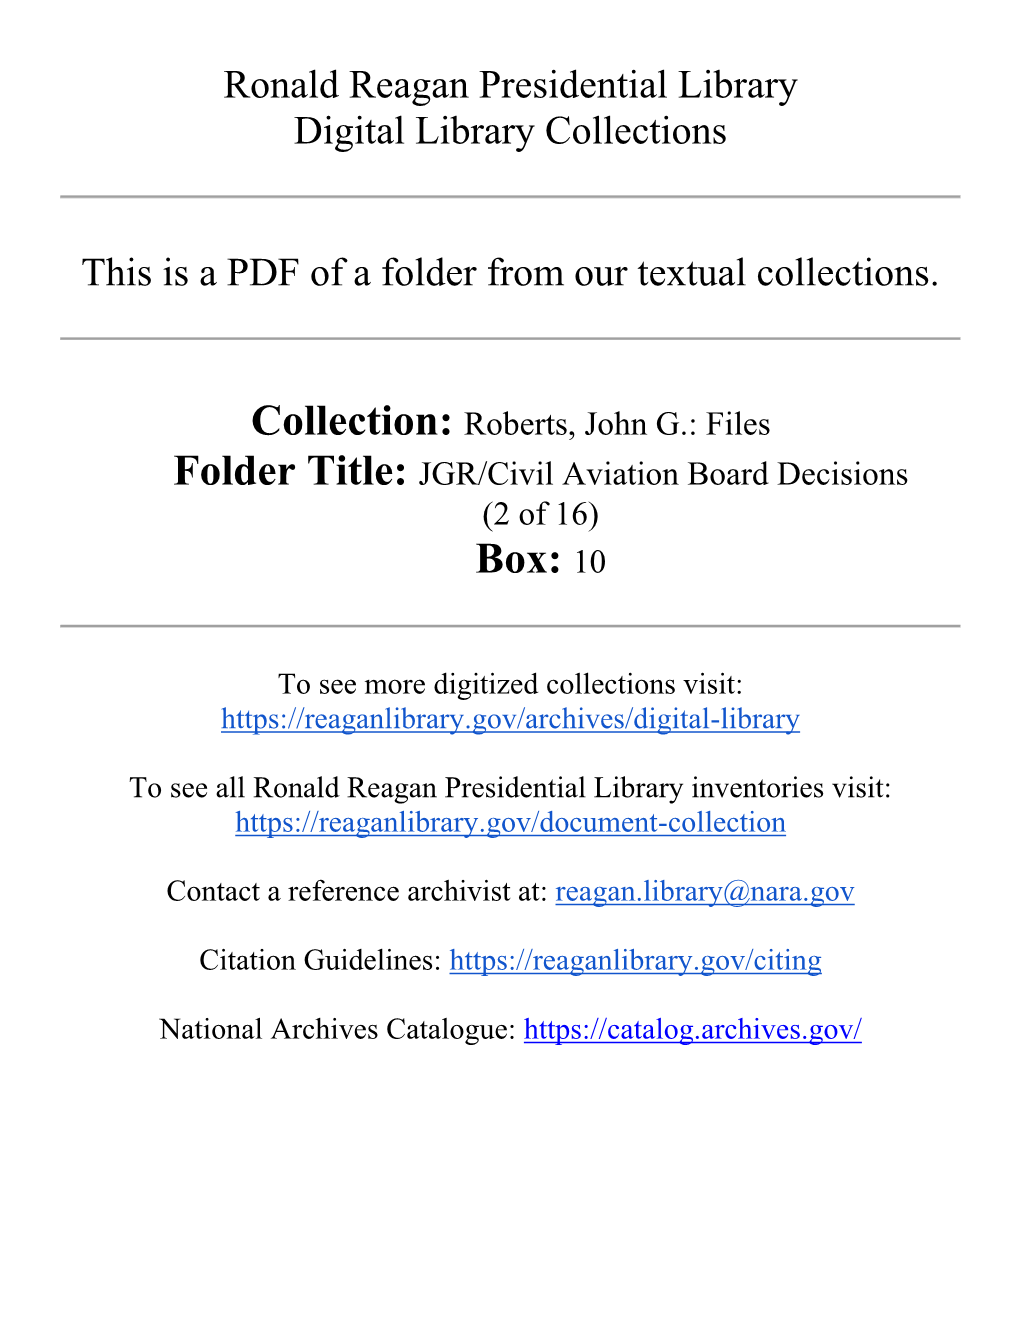 Files Folder Title: JGR/Civil Aviation Board Decisions (2 of 16) Box: 10